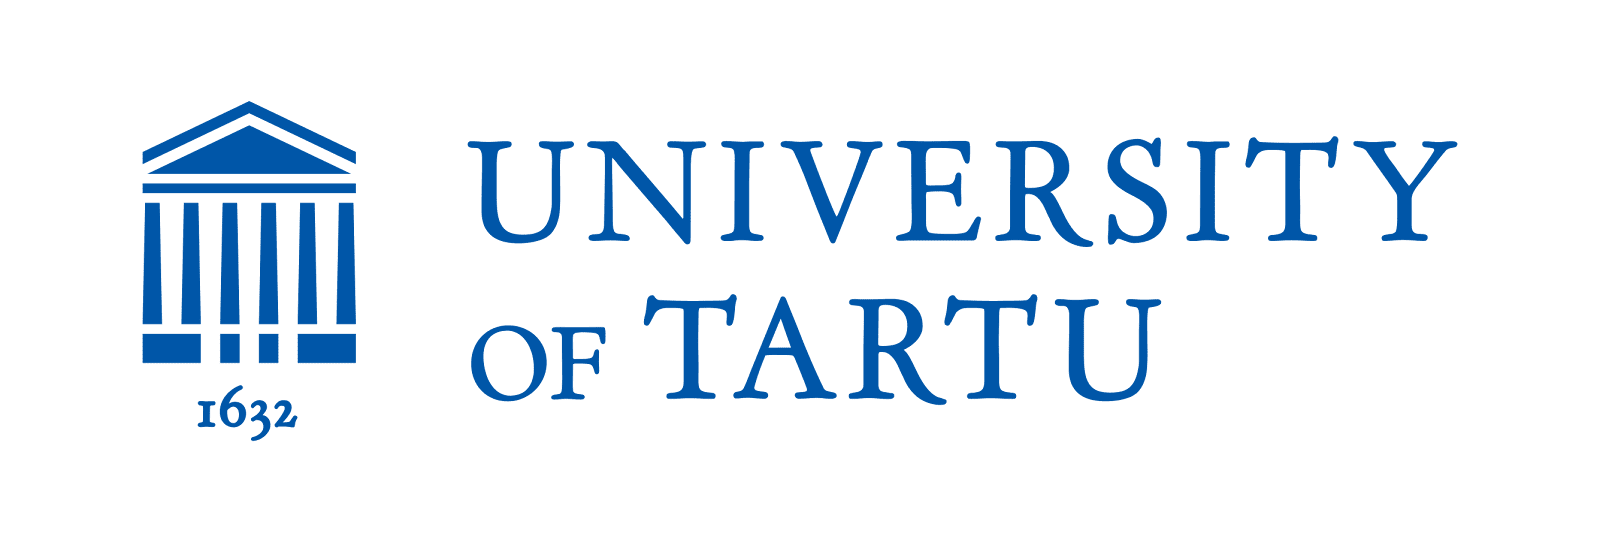 University of Tartu in Estonia - Master Degrees